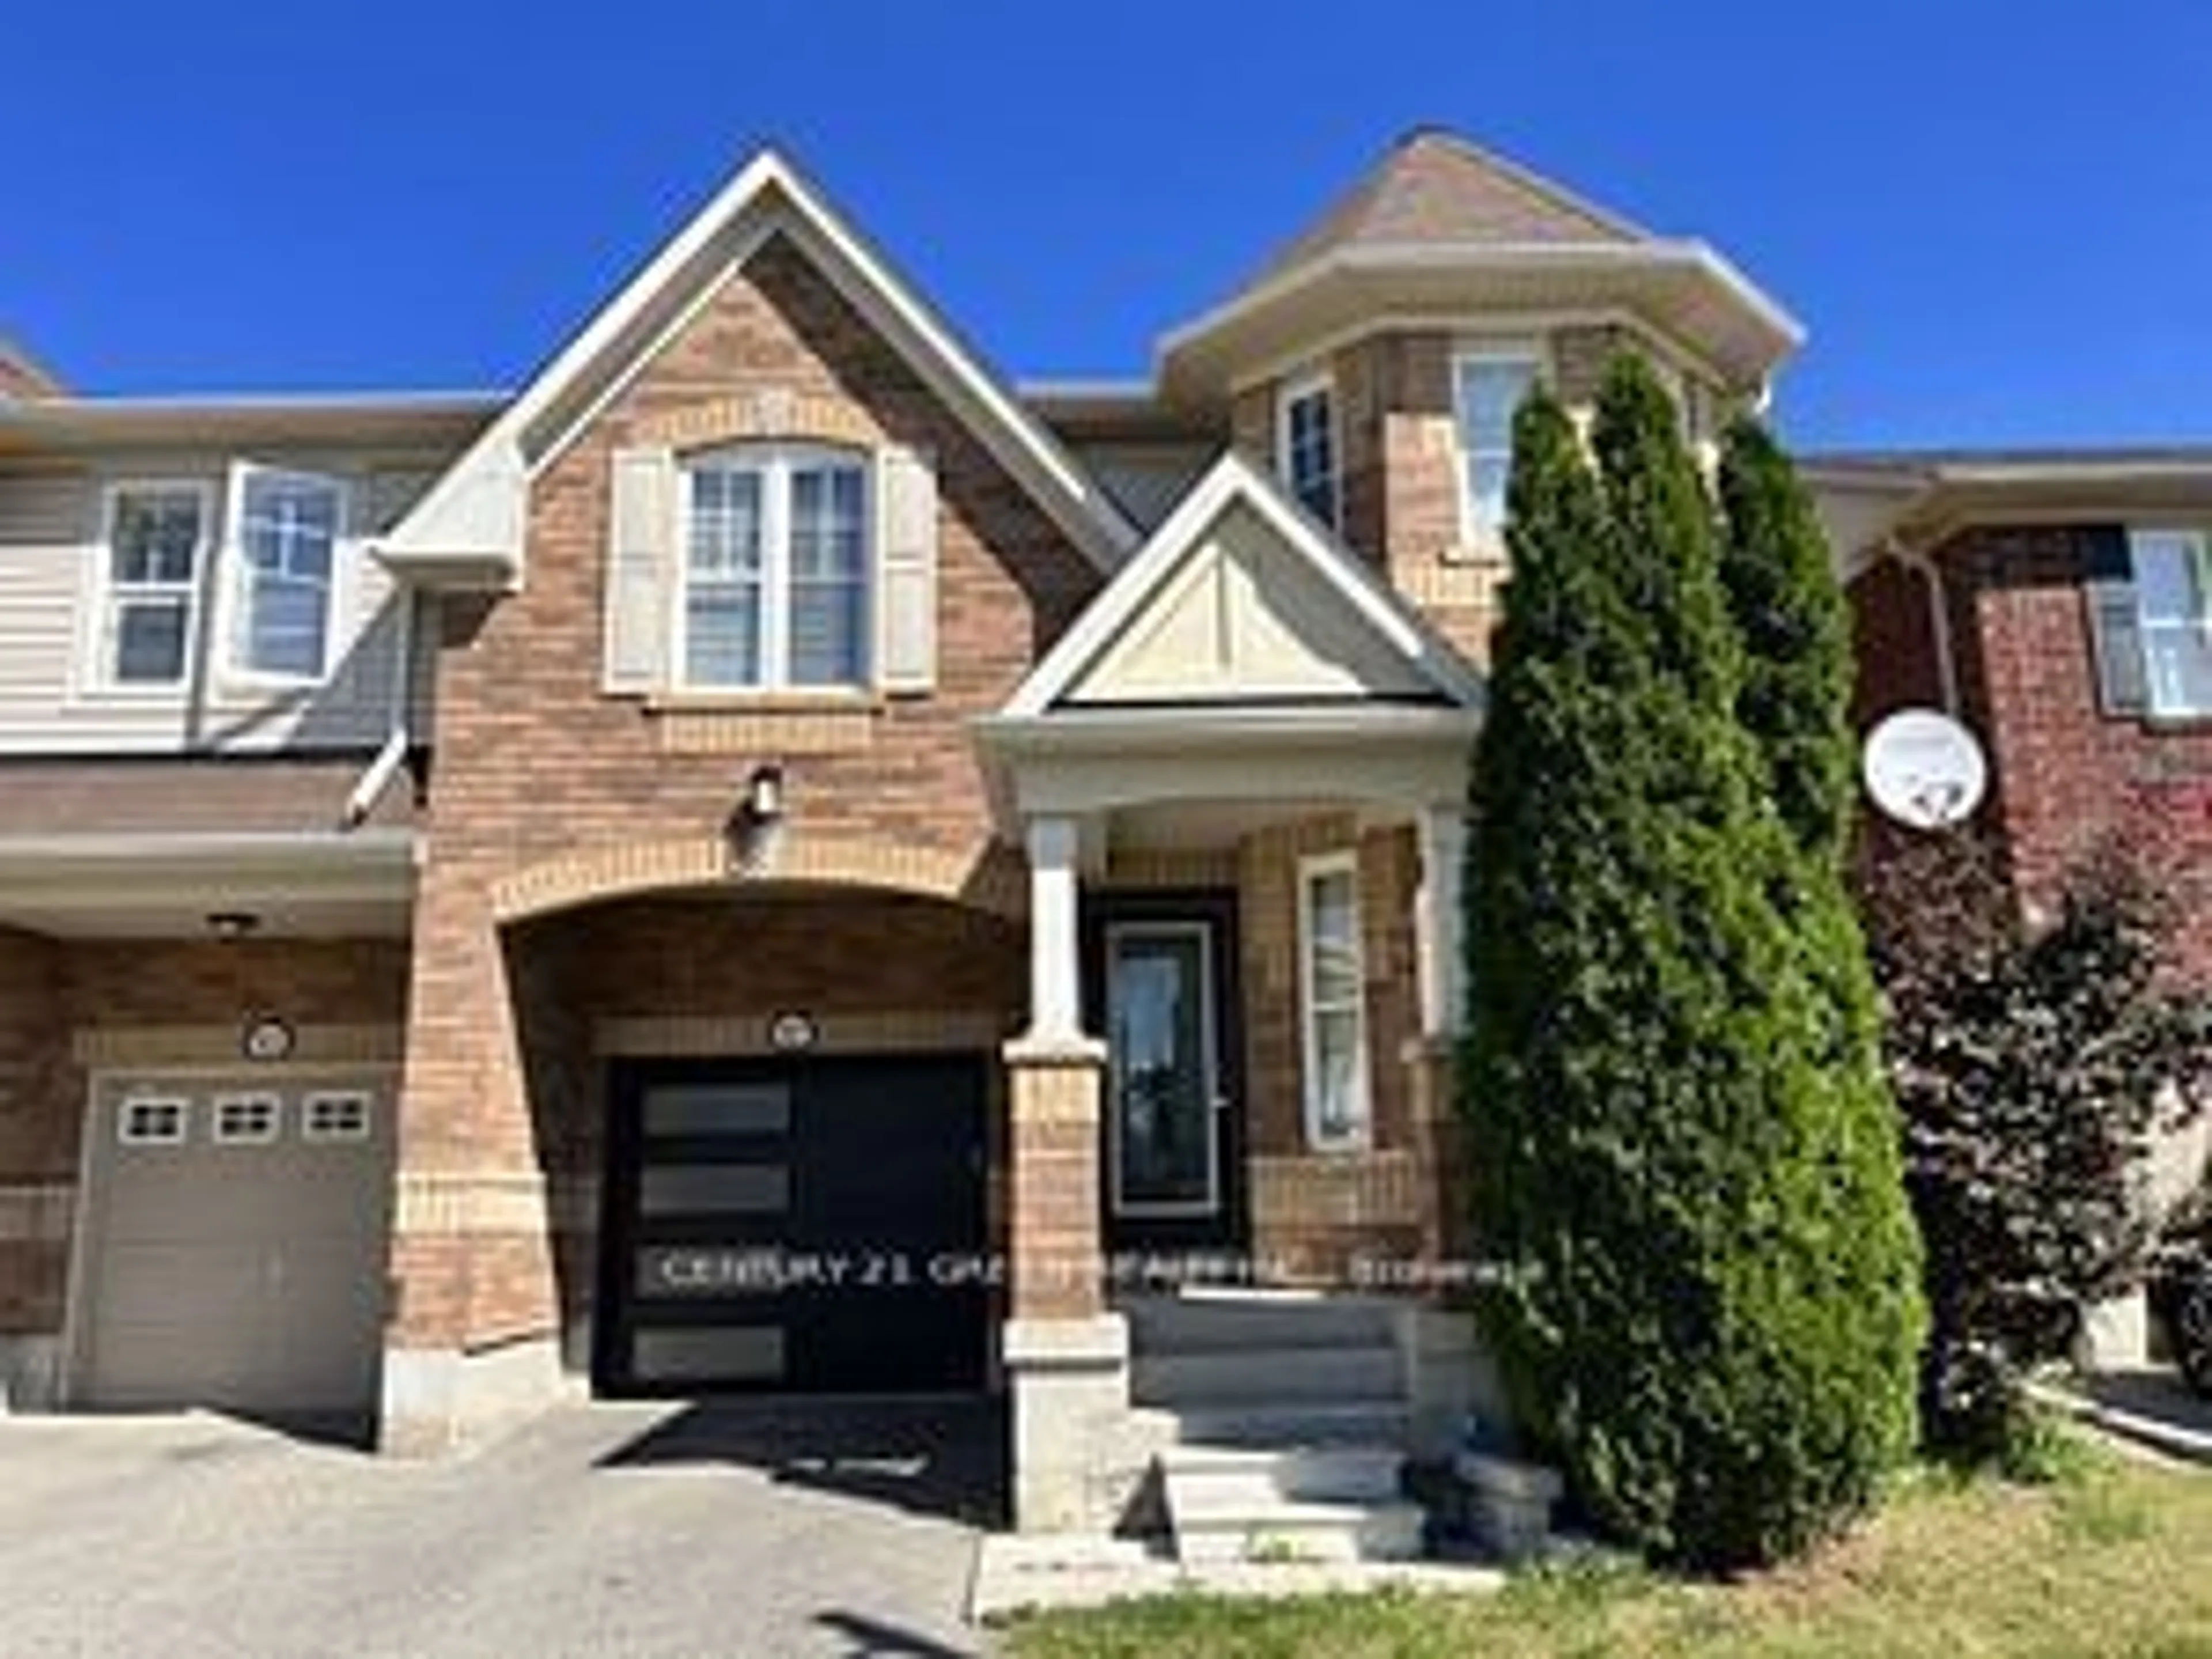 Home with brick exterior material for 927 Scott Blvd, Milton Ontario L9T 7C5